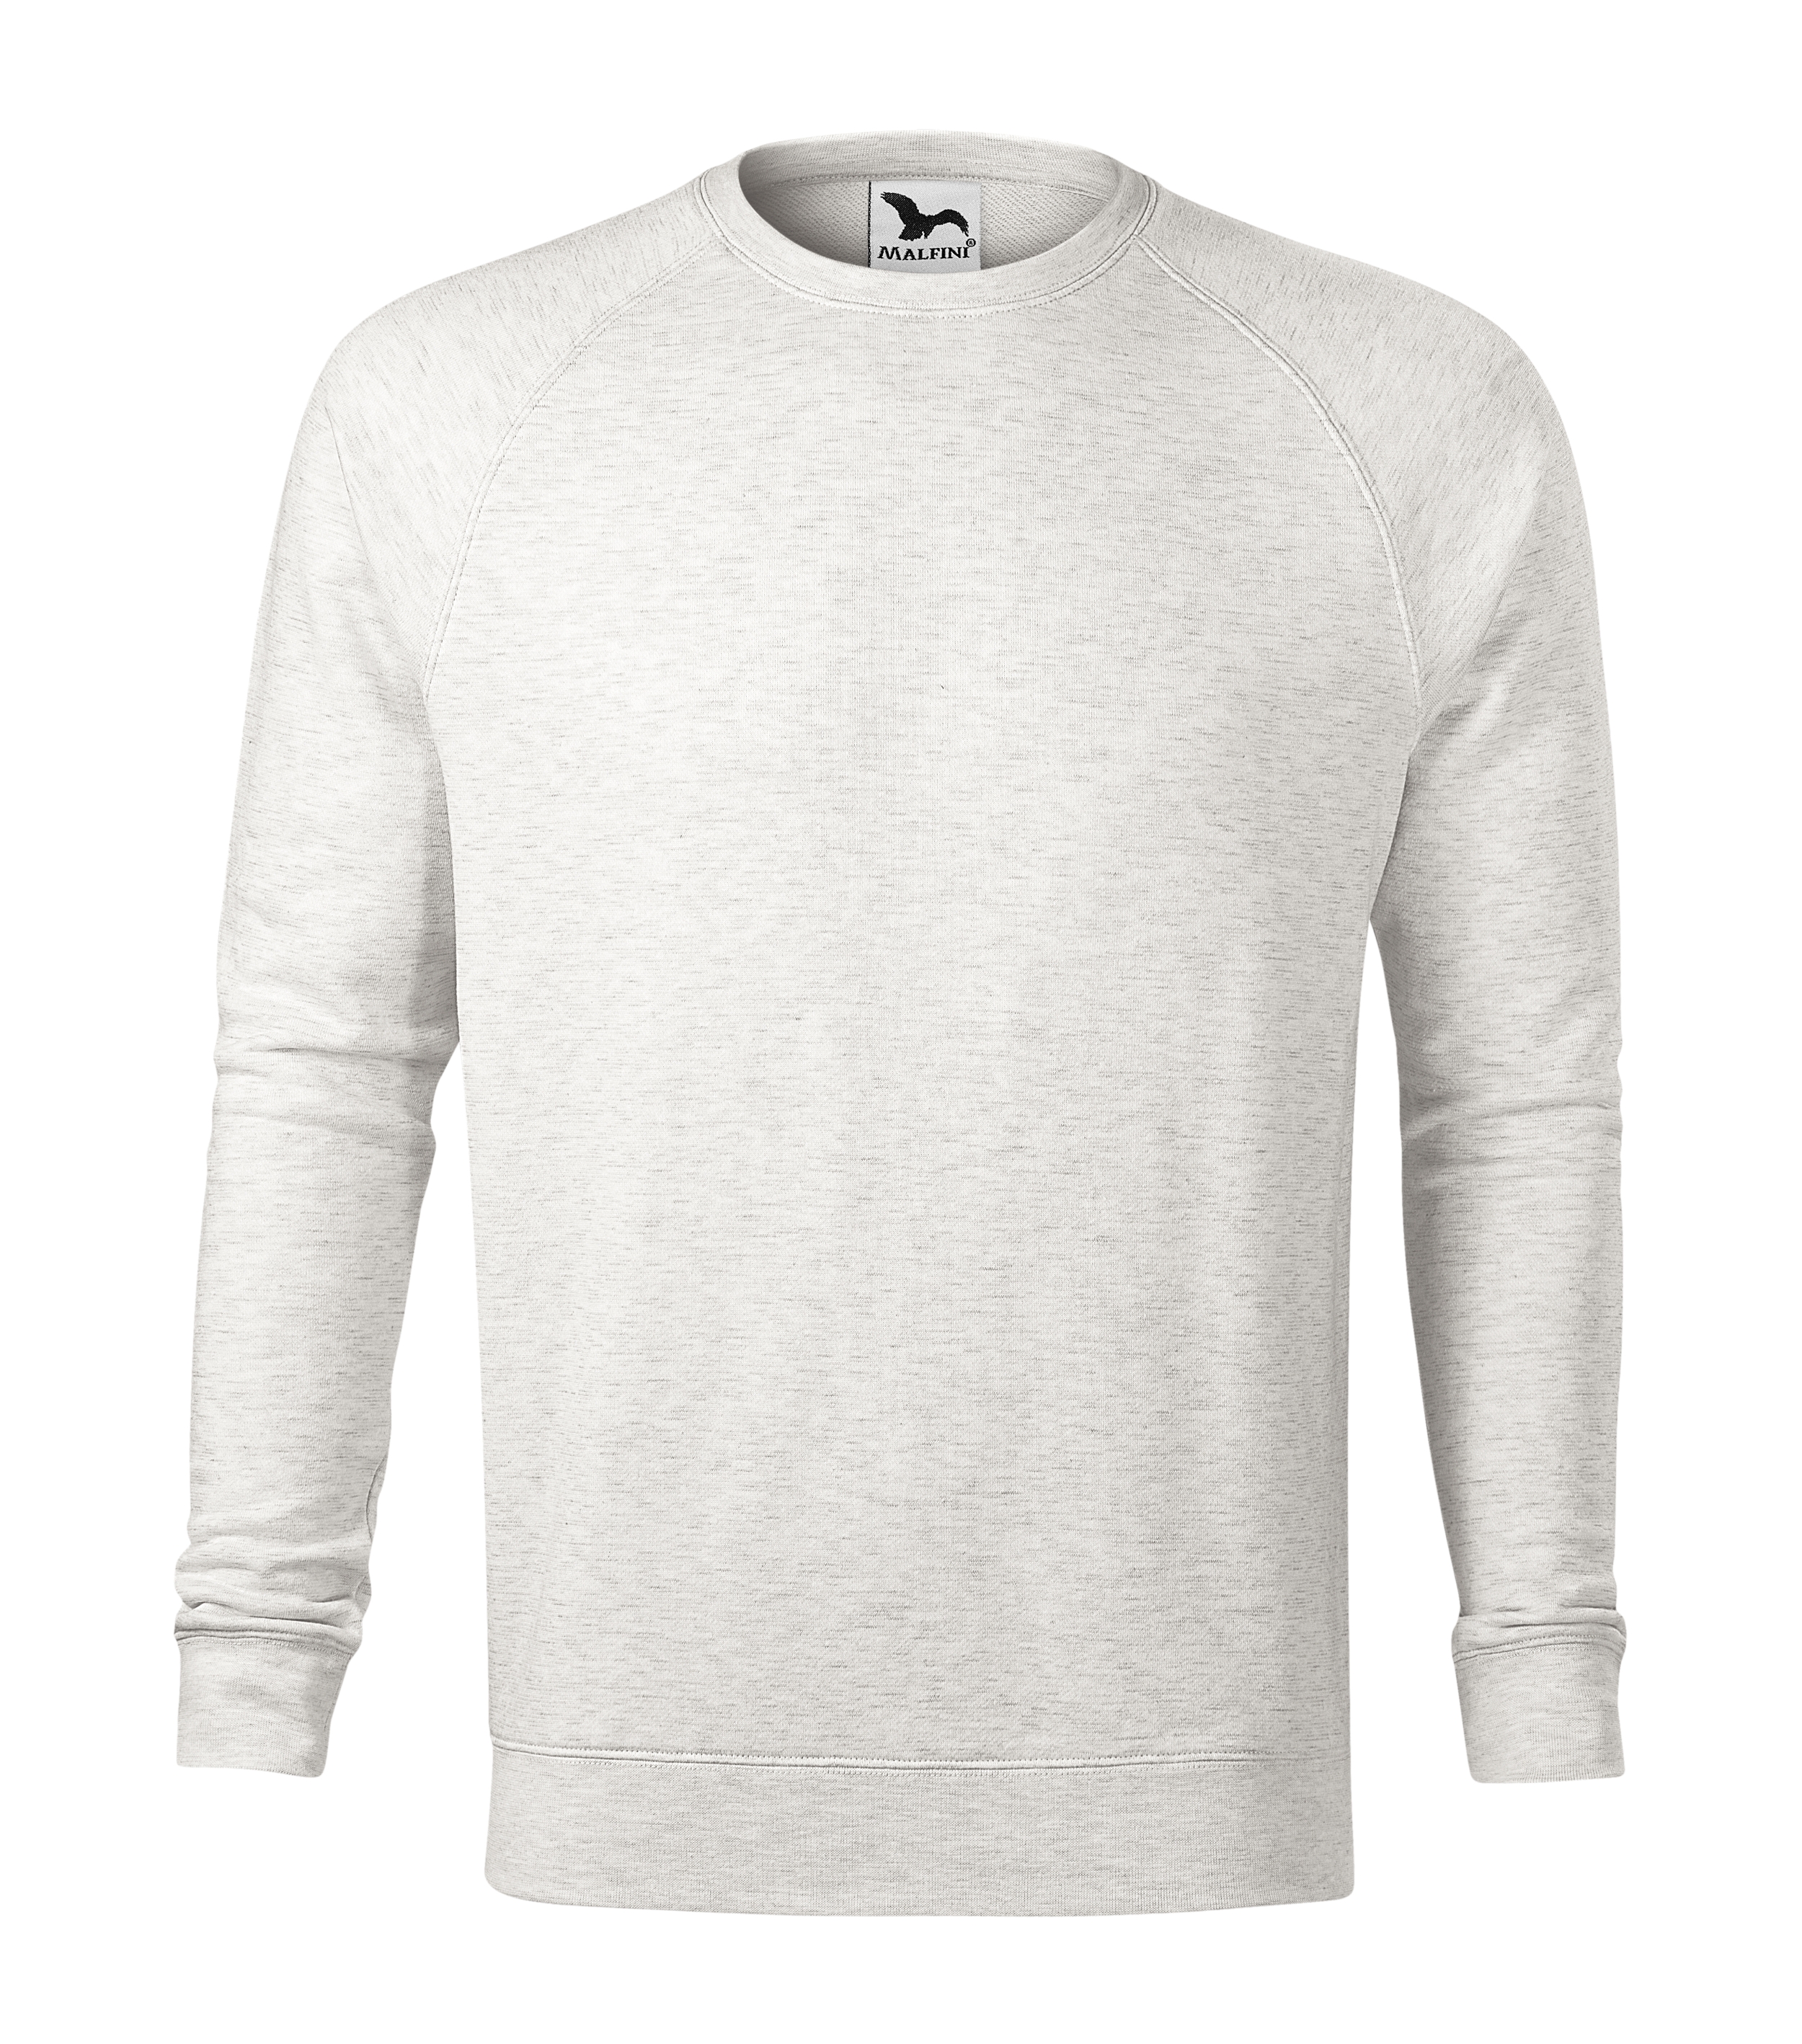 Merger 415 Sweatshirt Herren Pulli Pullover Sweater Sweatshirts Arbeitspullover